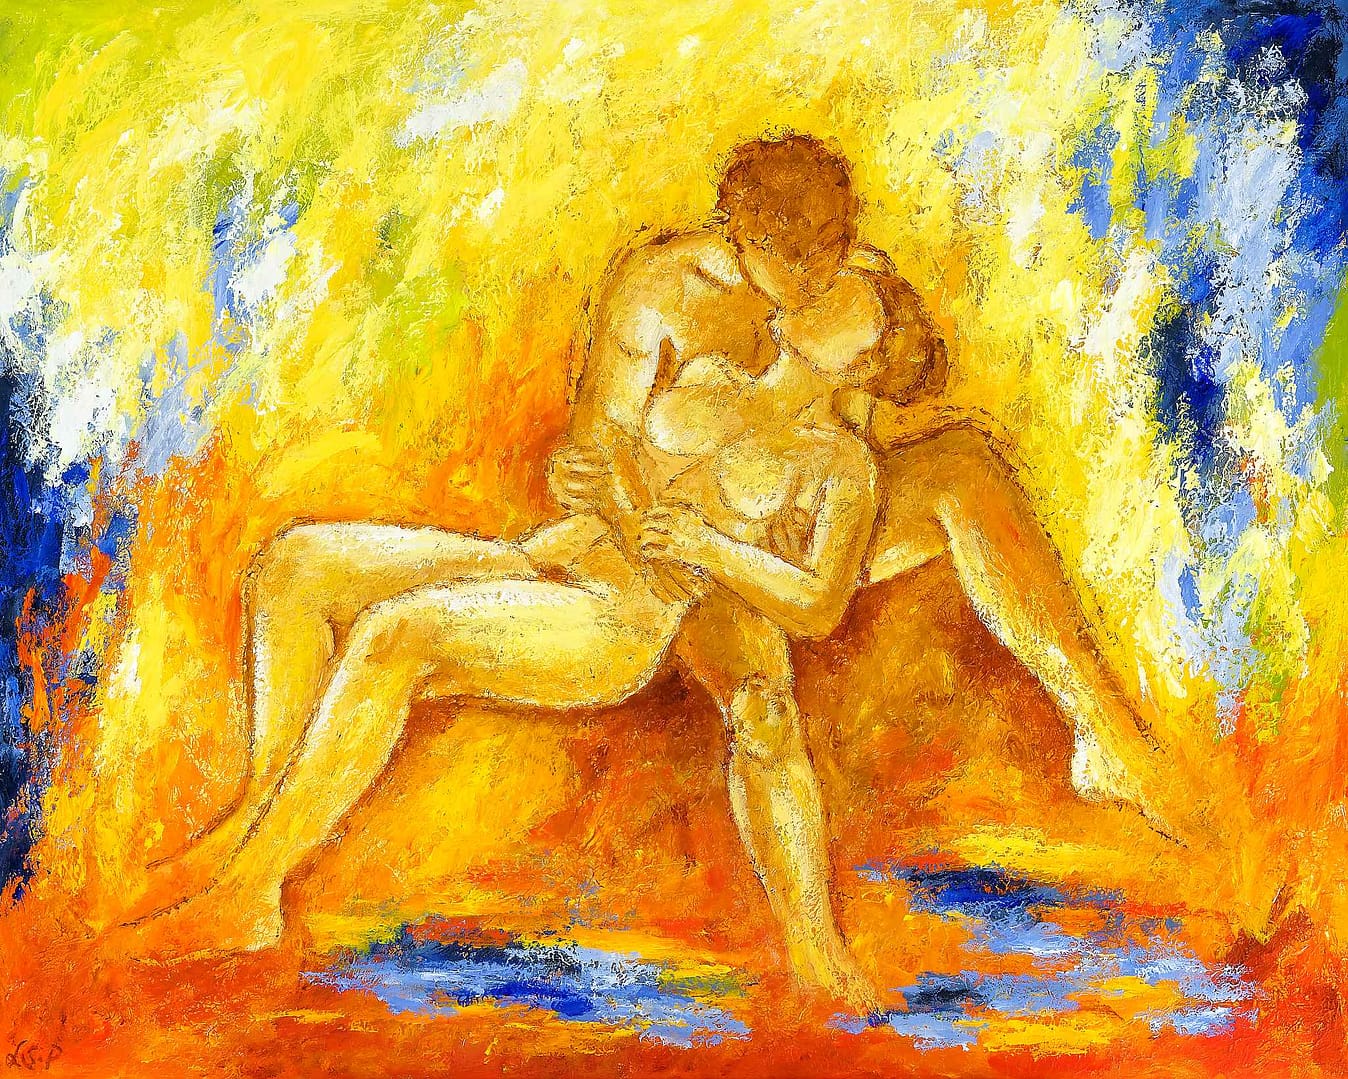 Lene Schmidt-Petersen: "De forelskede" (100x80 cm)